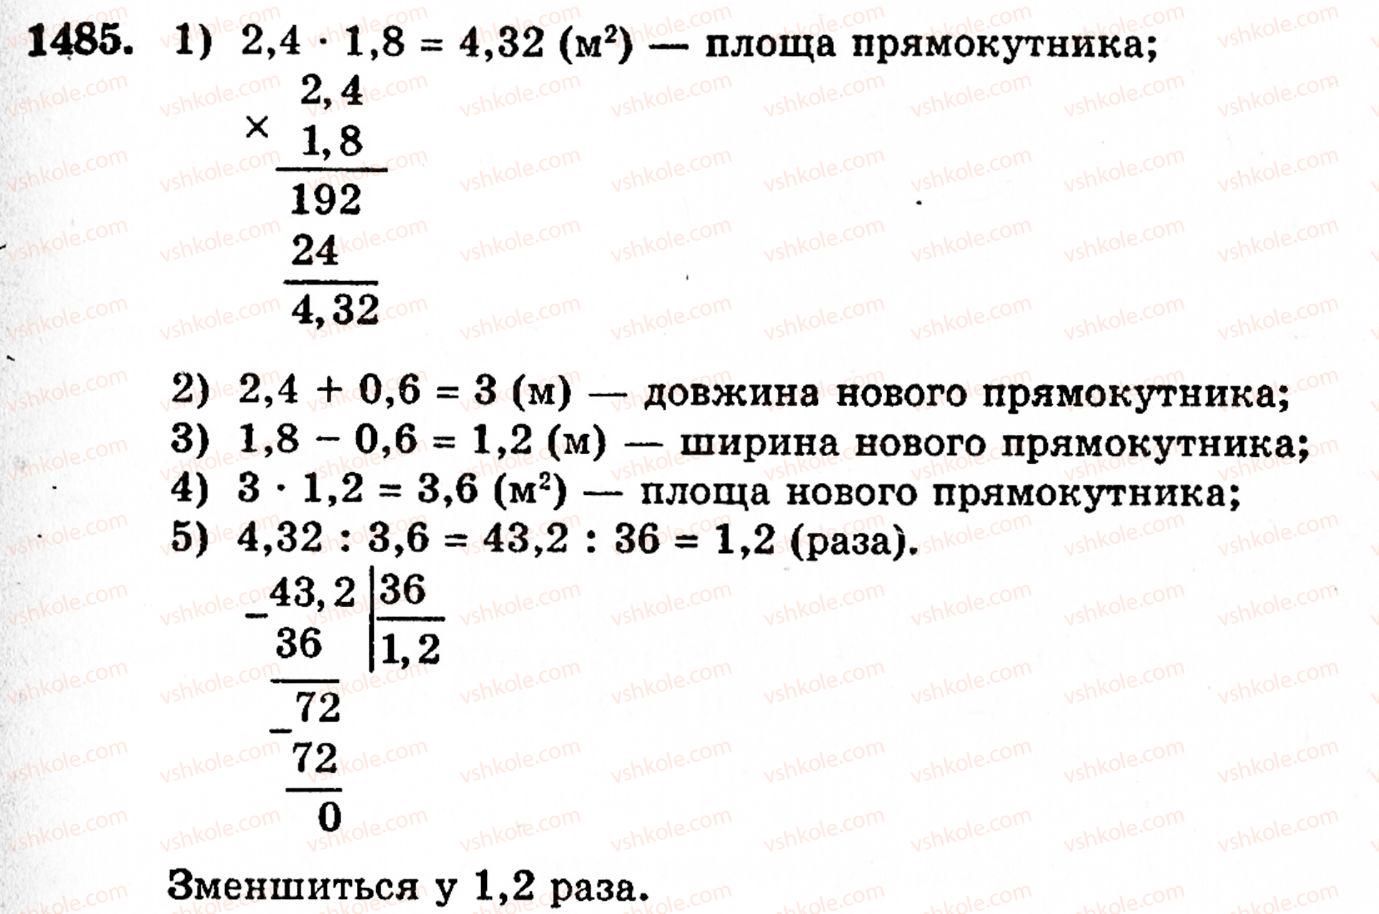 5-matematika-gp-bevz-vg-bevz-1485